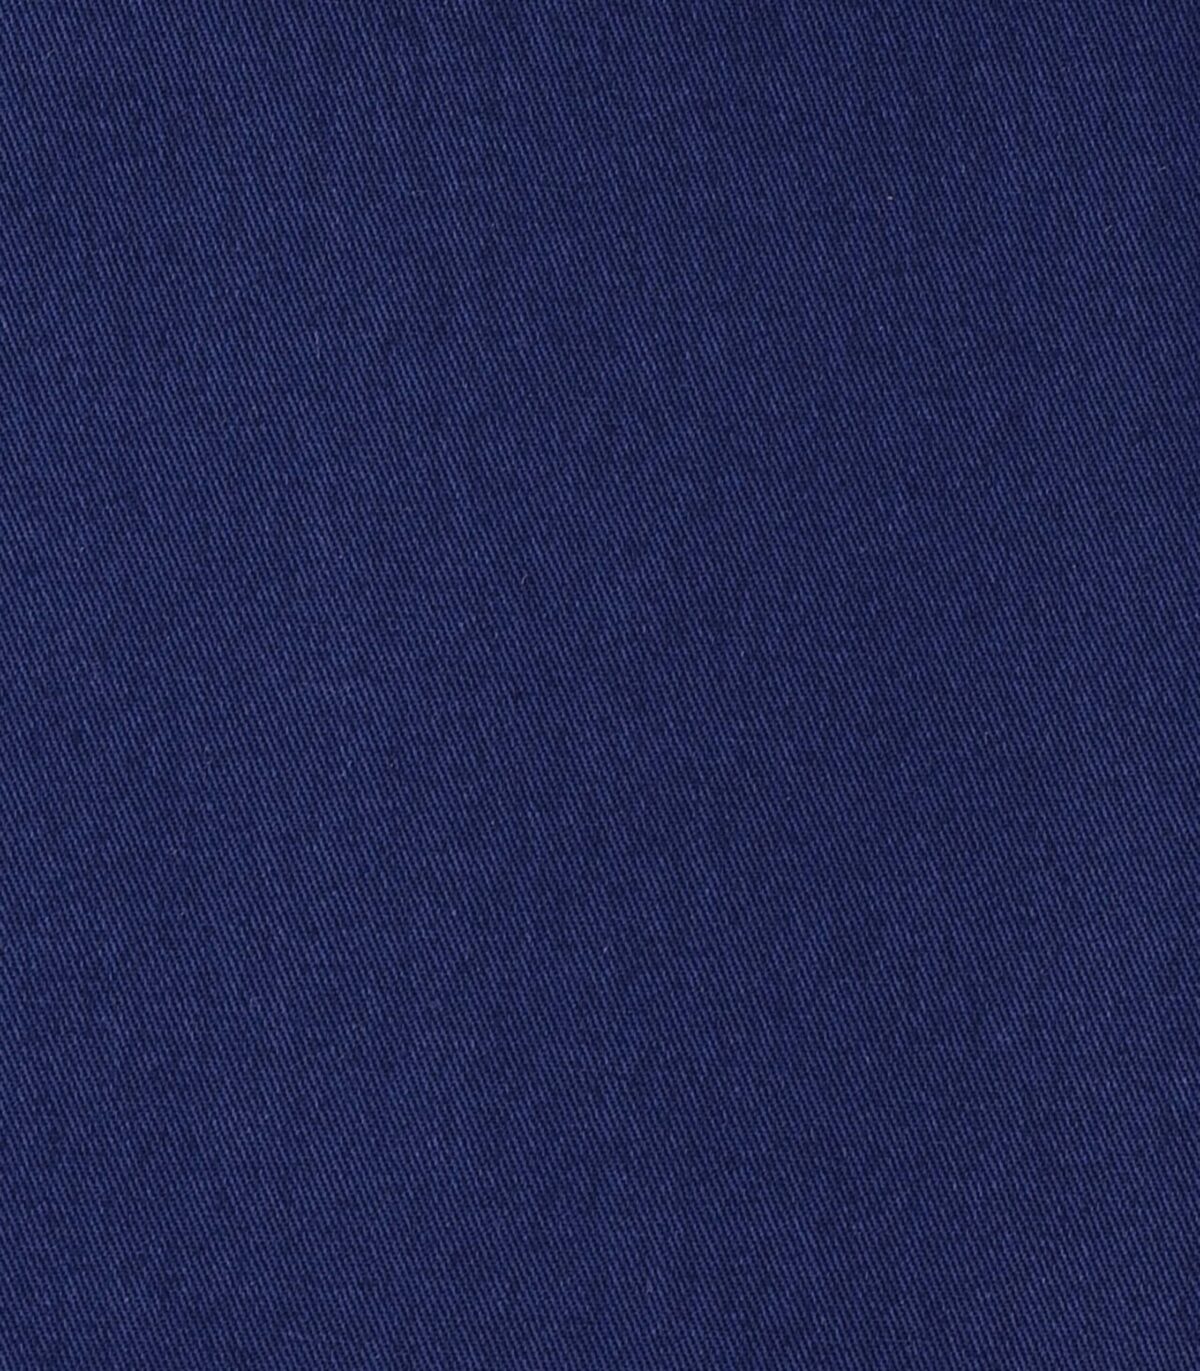 Cotton Navy Drill Fabric